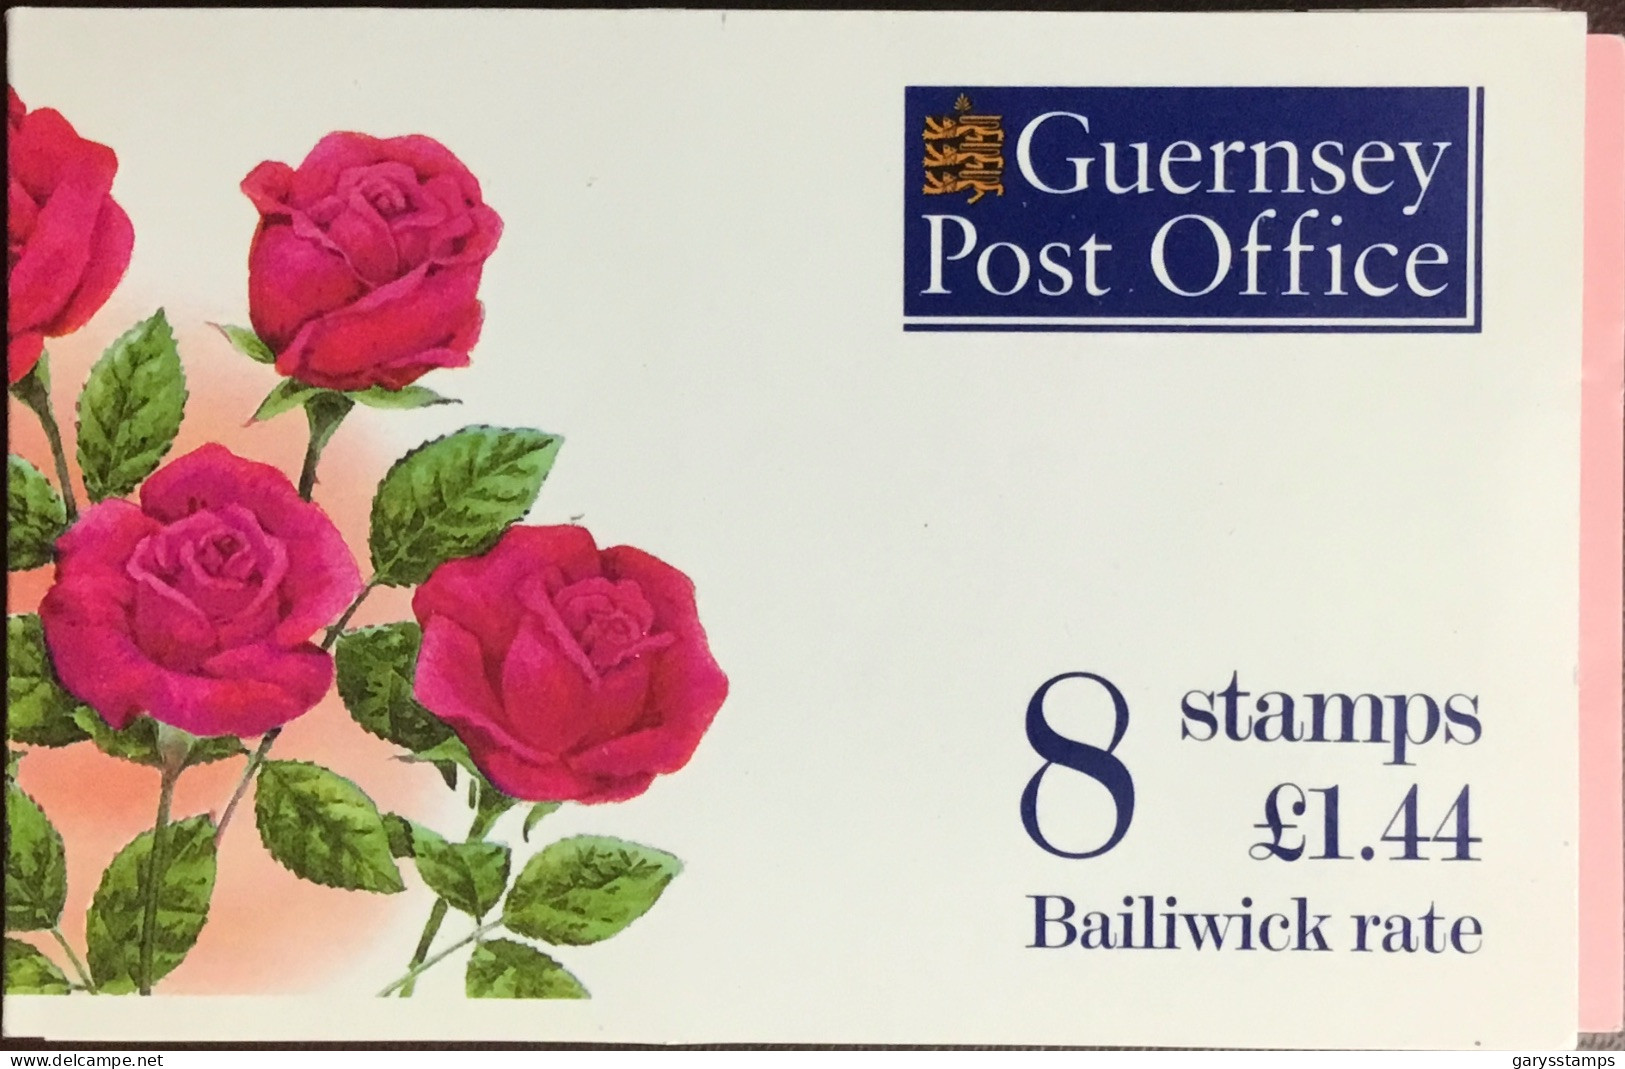 Guernsey 1997 Roses Flowers Booklet Unused - Rosas